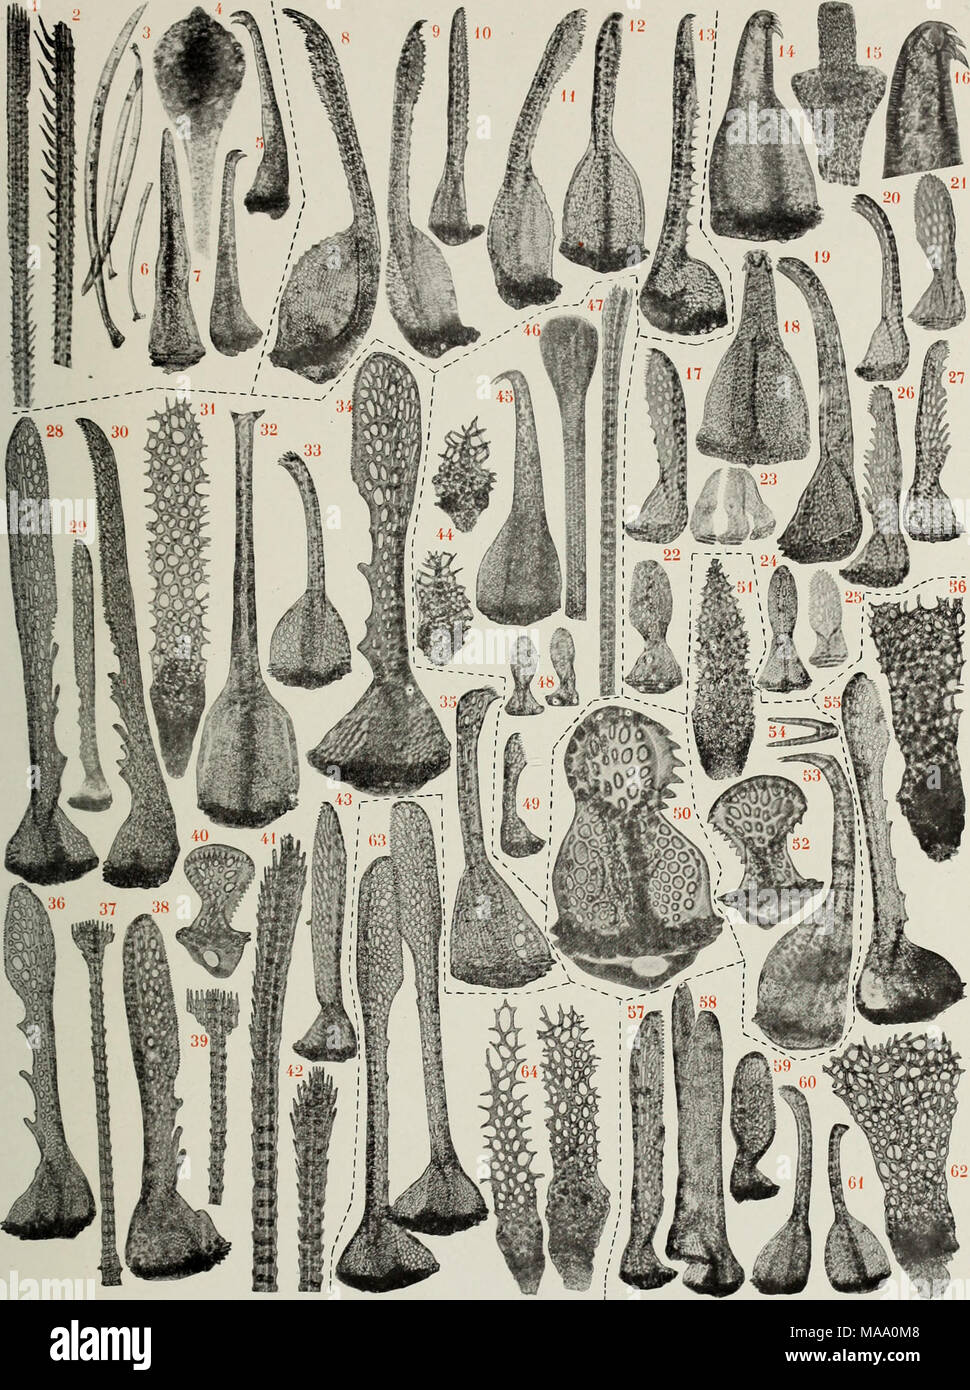 . Echinoderma of the Indian Museum ... Collected by the Royal Indian Marine Survey ship Investigator. .. . • R. Koehler pliot. S'^^ Ljonnaise de Pliotocliromogravure 1-7 PSEUDOMARETIA ALTA. 8-13 MARETIA PLANULATA. 14-27 PARASTER GIBBERULUS. 28-43 BRISSOPSIS OLDHAMI. 44-49 PRYMNASTER ANGULATUS. 50 BRISSOI'SIS DUPLEX. 51-54 BRISSOPSIS LUZONICA. 55-62 BRISSOPSIS PARALLELA. 63 et 64 BRISSOPSIS BENGALENSIS. Stock Photo